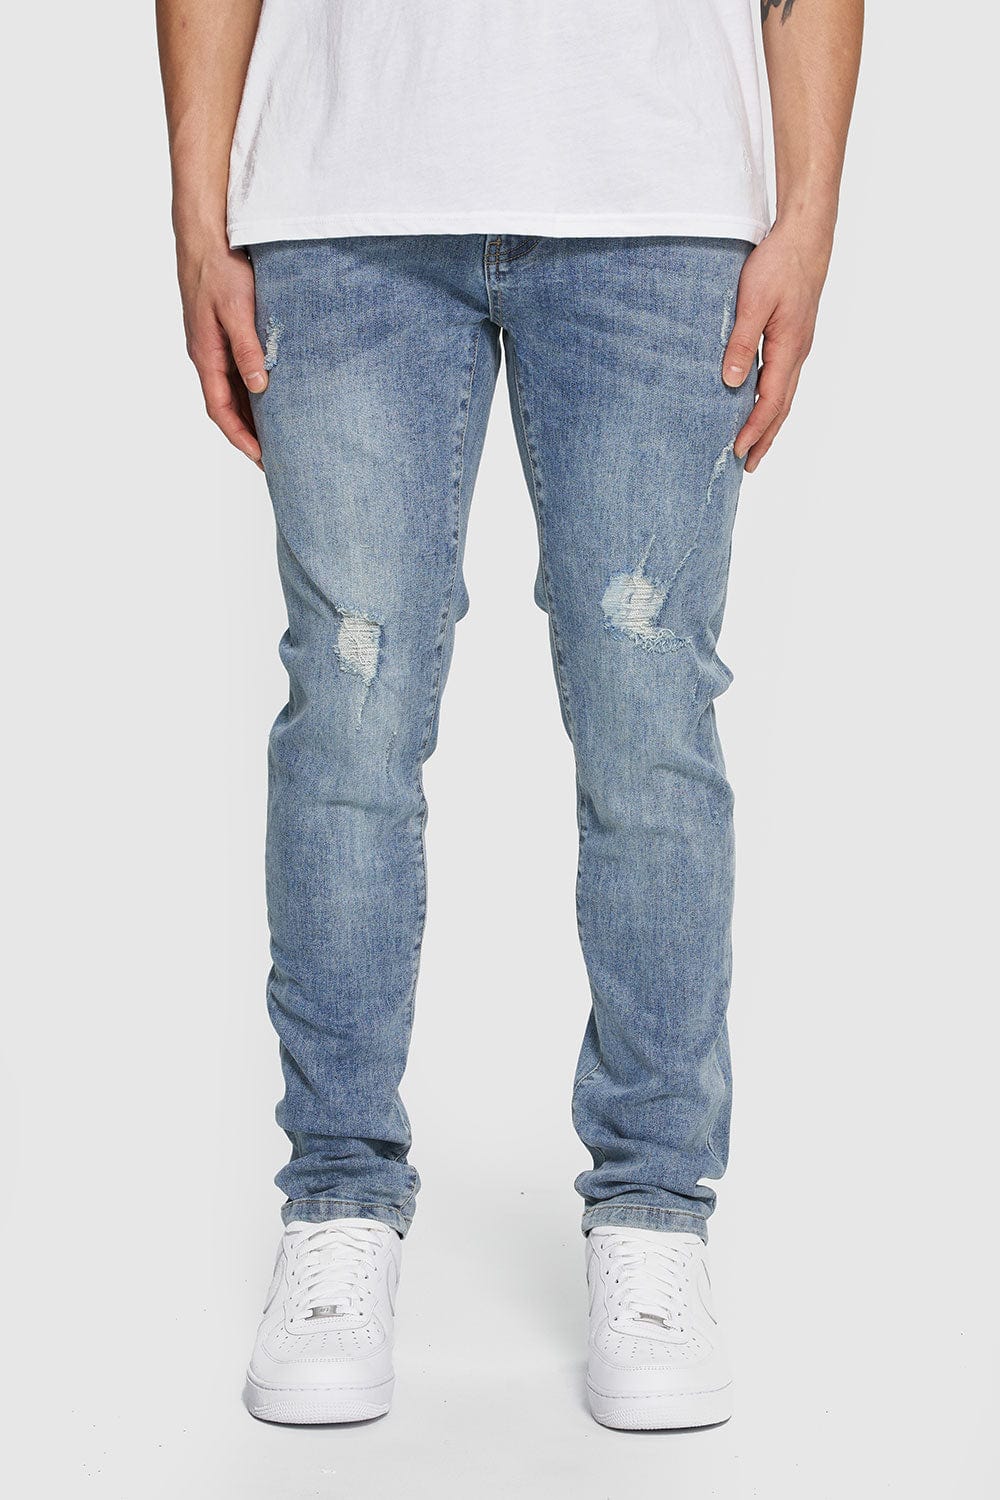 Buy Destroyed Skinny Denim Jean Men's Jeans & Pants from Kuwalla. Find  Kuwalla fashion & more at